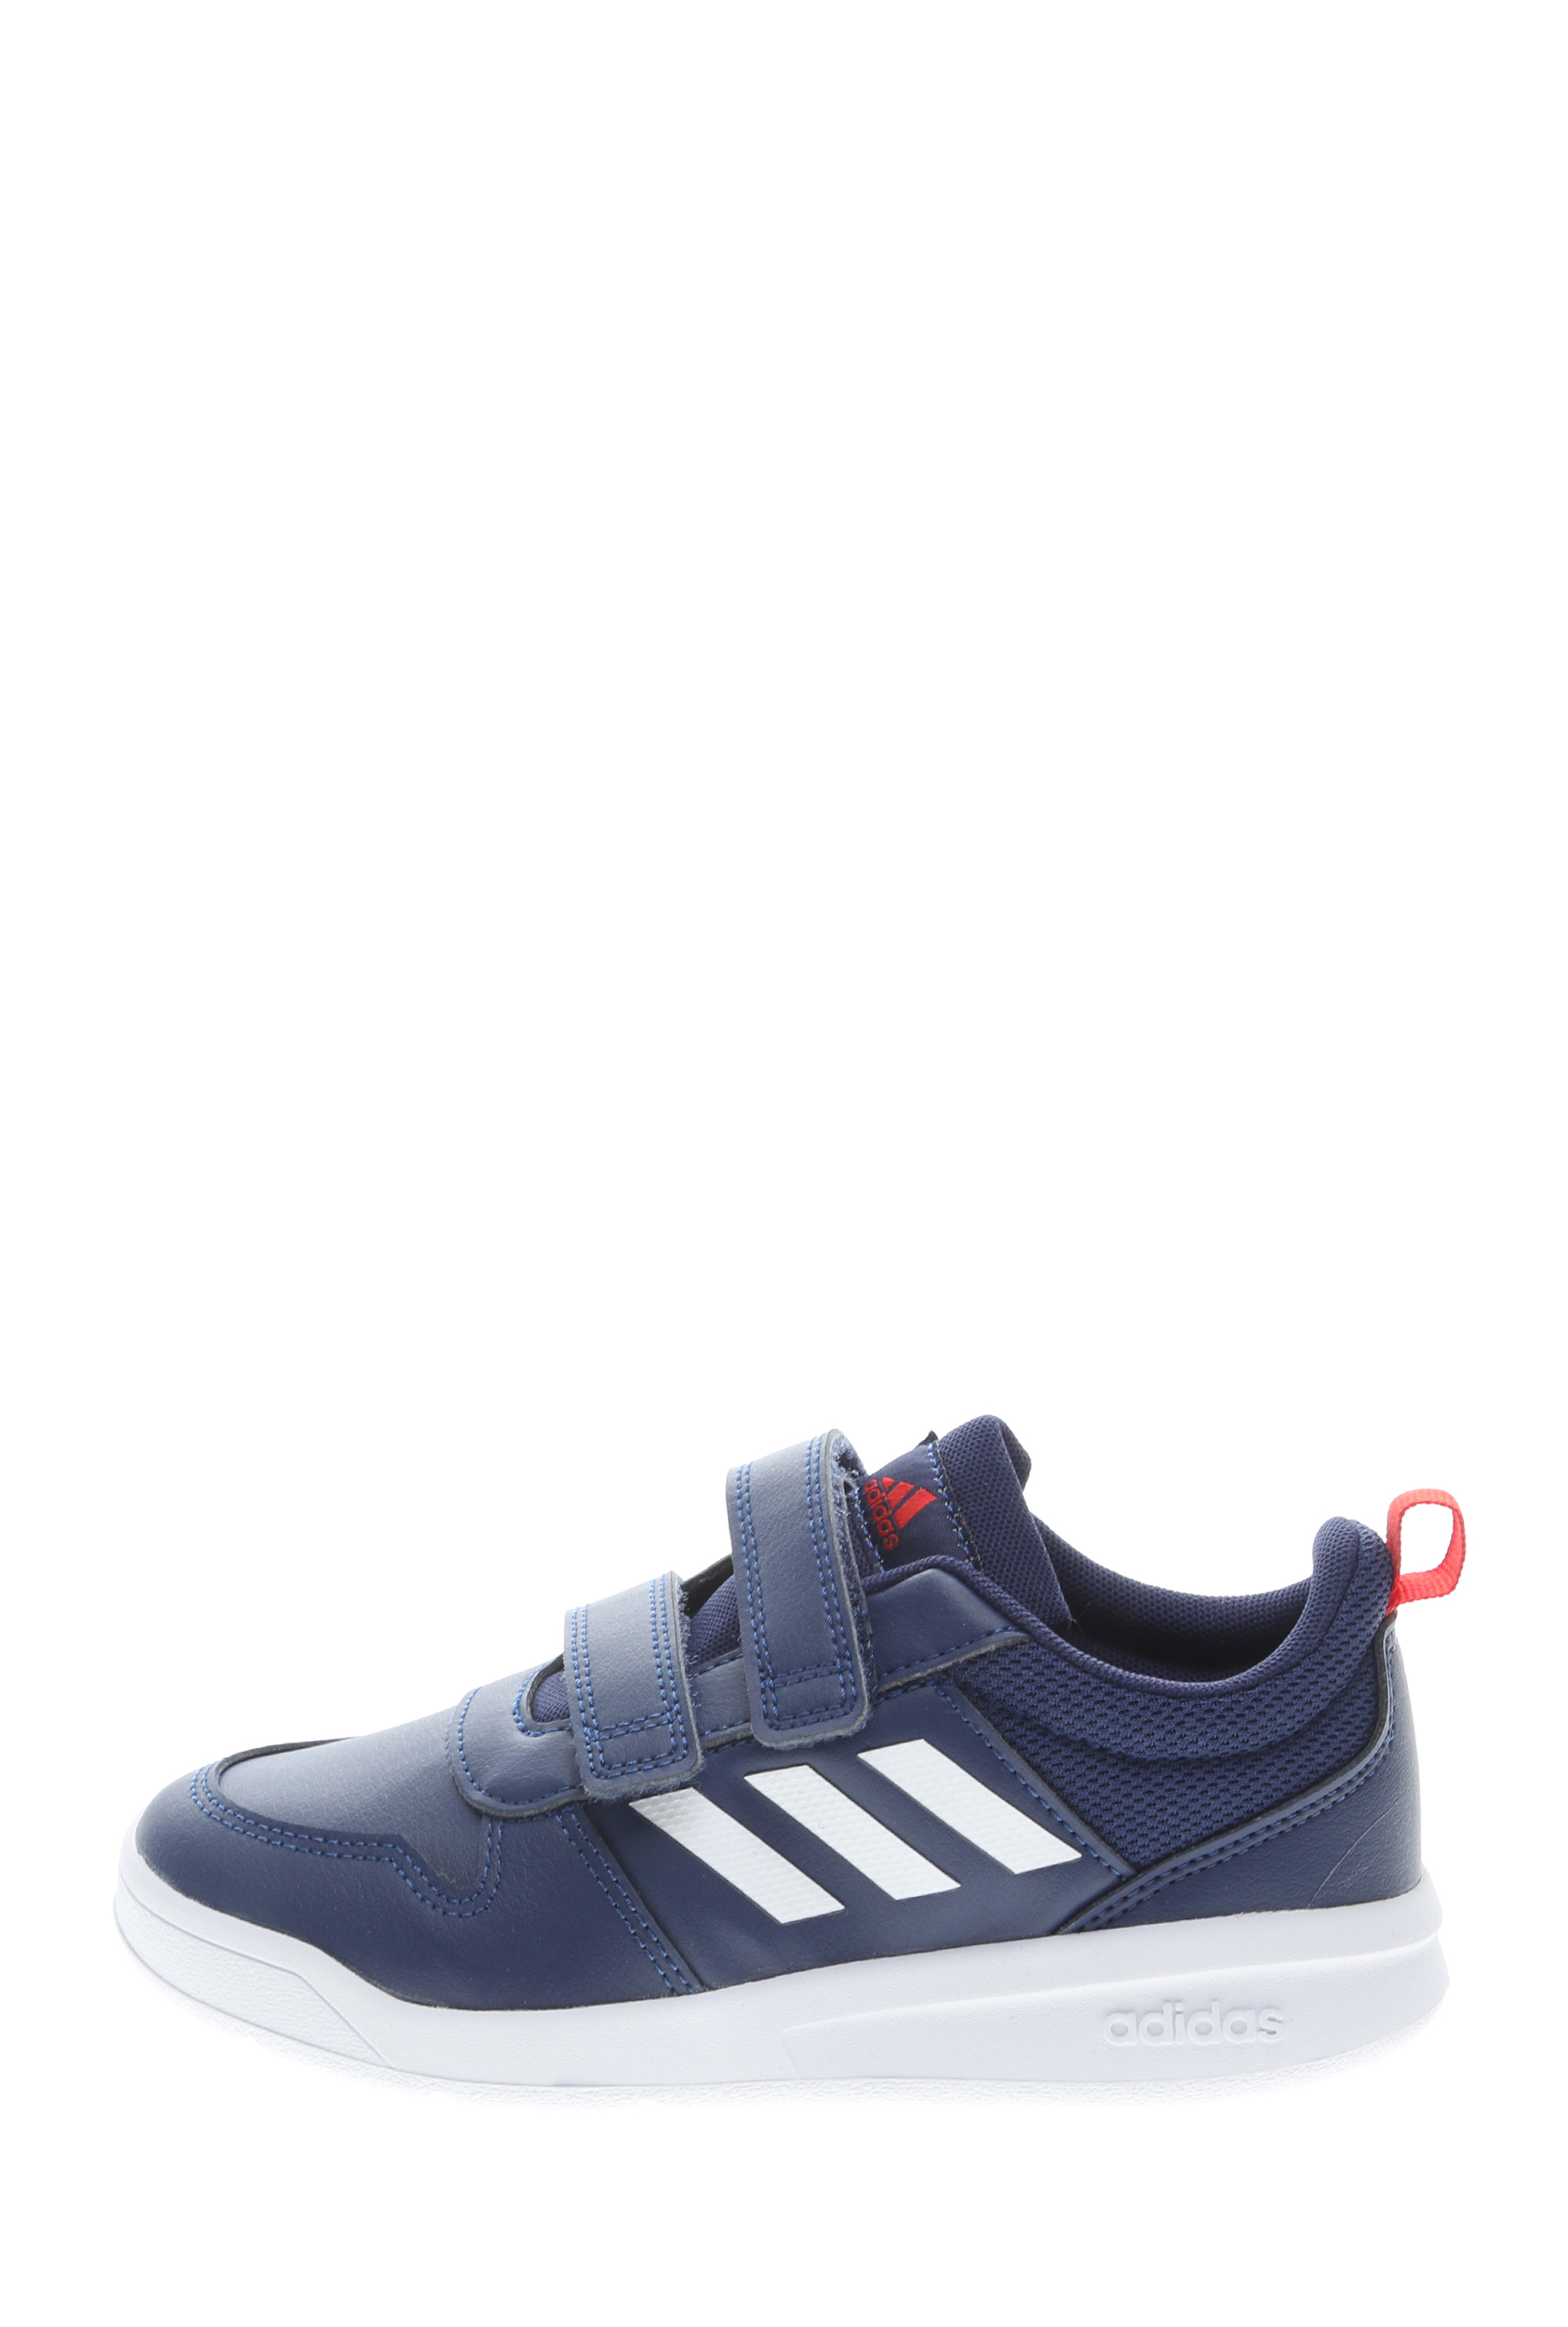 adidas Performance – Παιδικά παπούτσια adidas Performance VECTOR C μπλε 1793821.0-0011